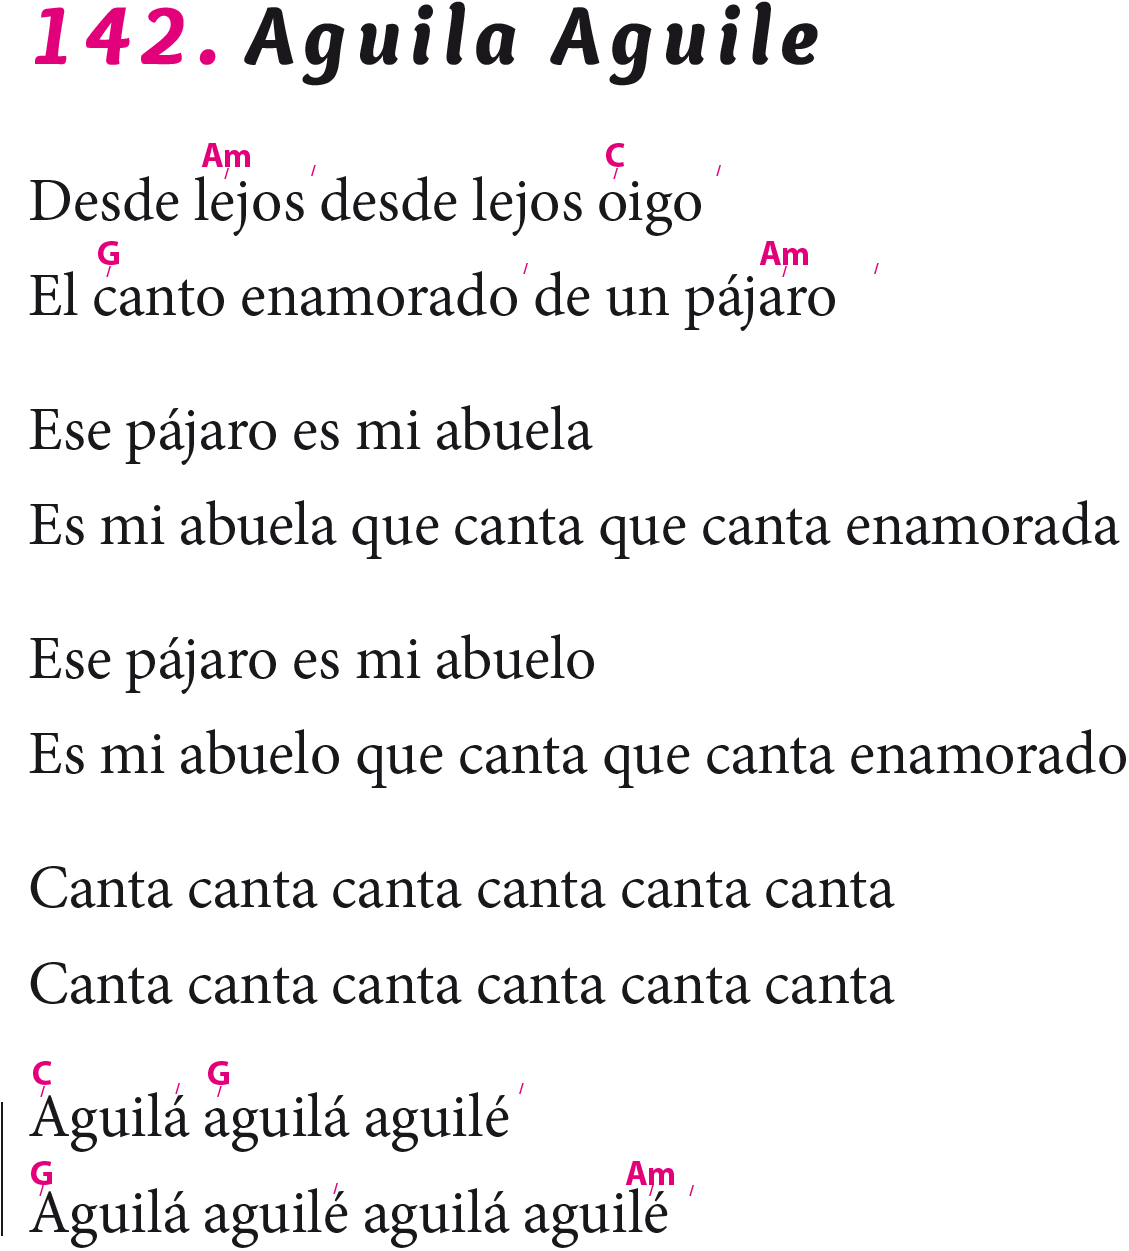 Aguila Aguile - SONG-CIRCLE